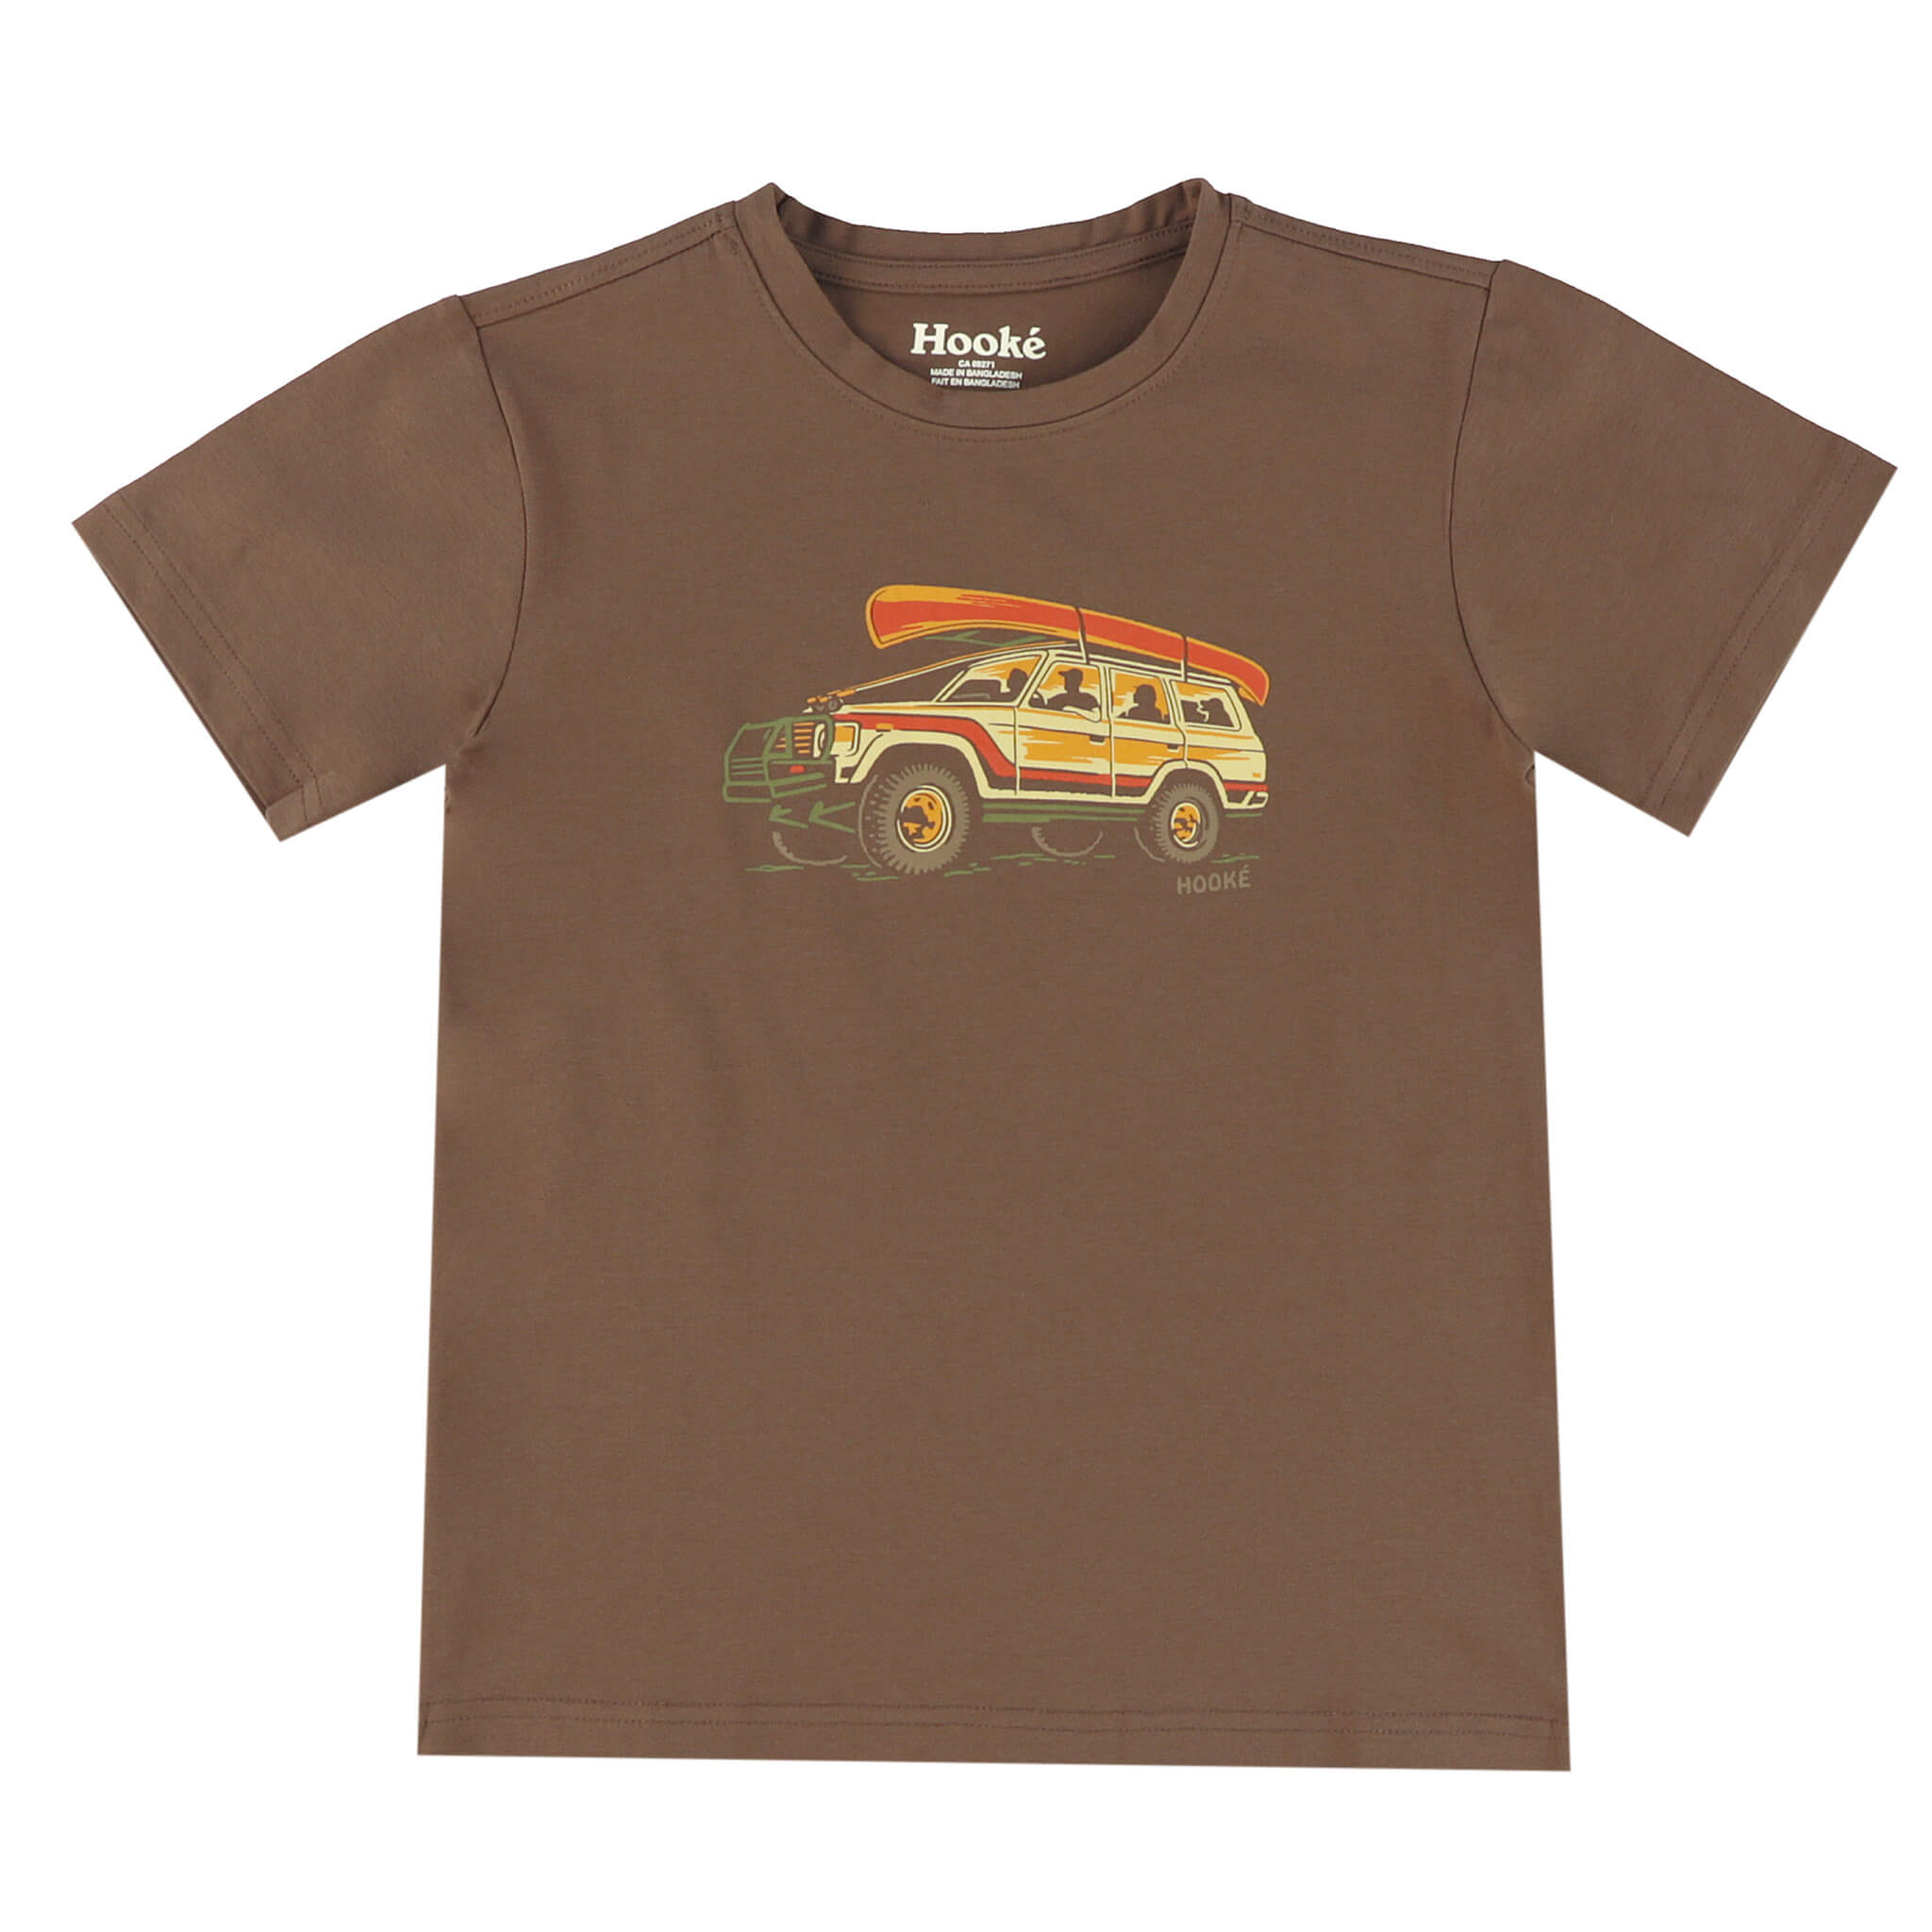 K's Fishing Trip T-Shirt 10 / Brown